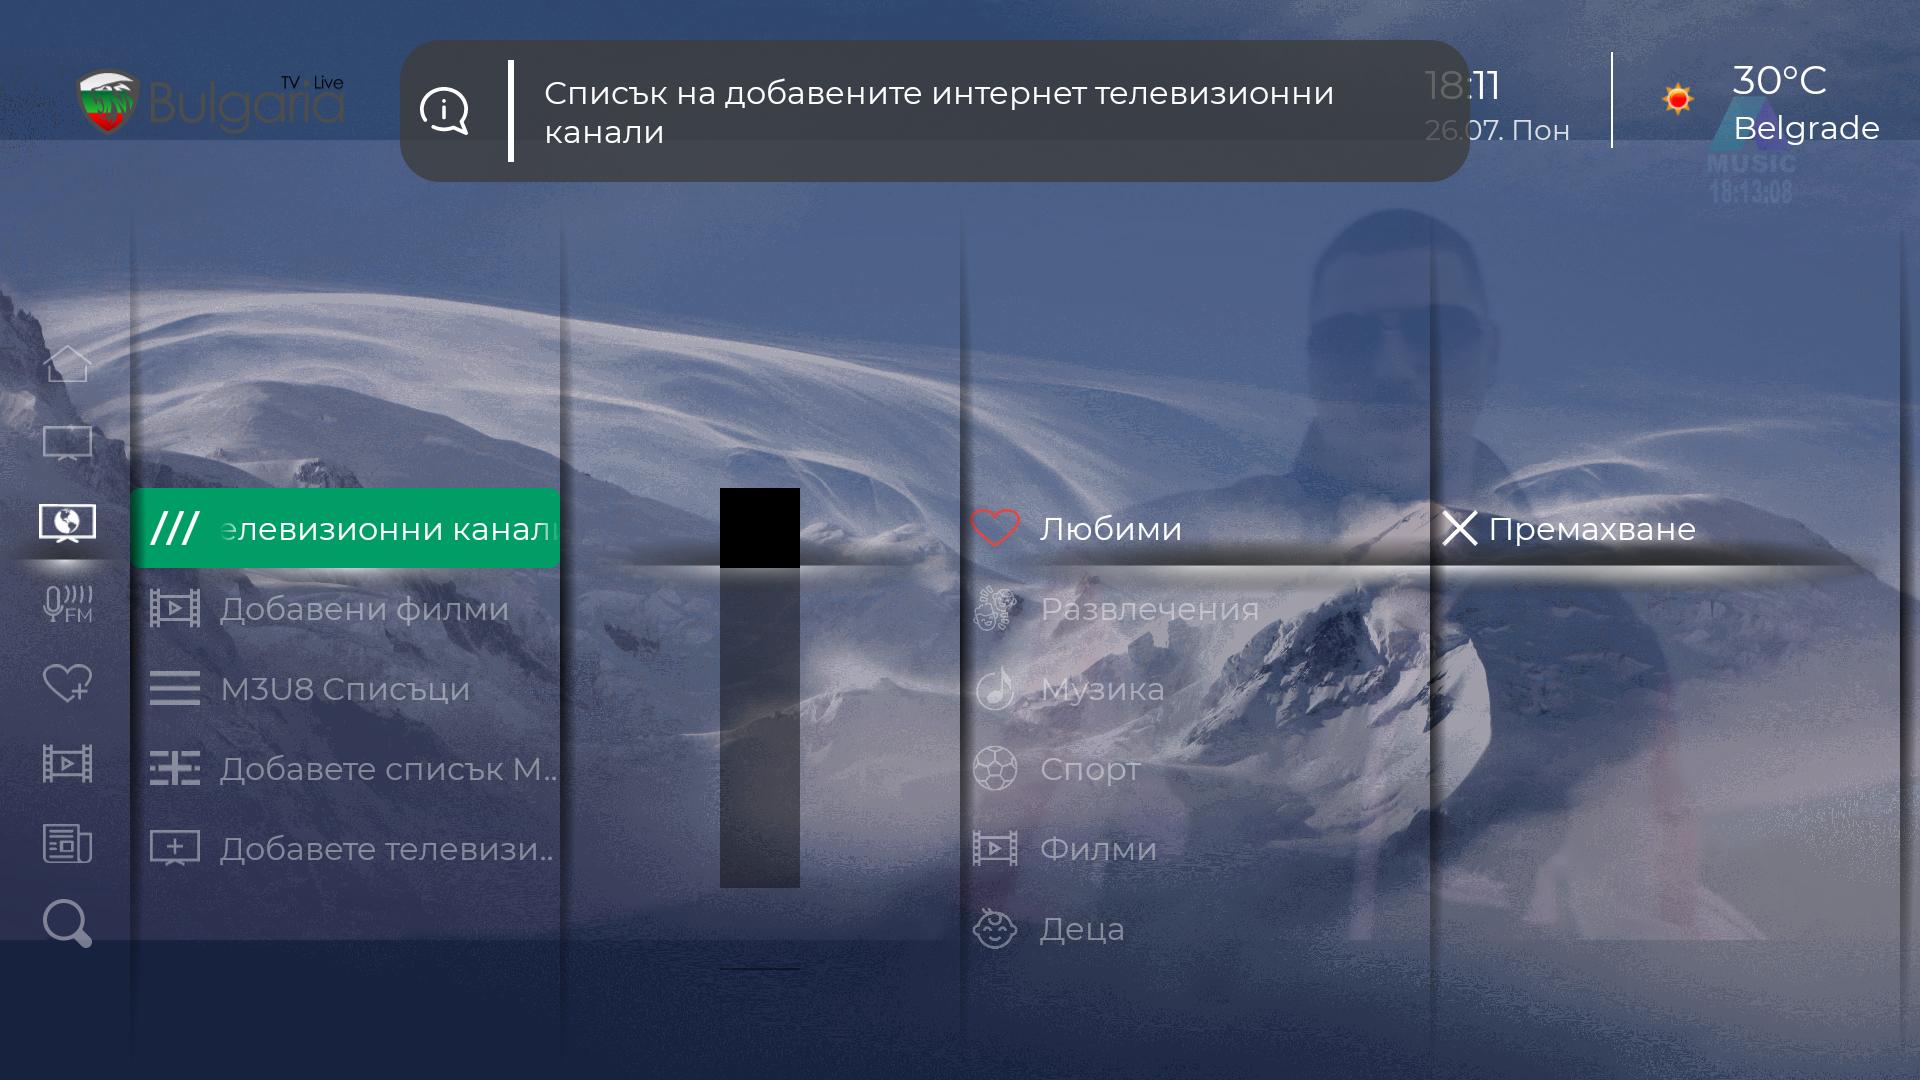 Bulgaria Live 1.2.04 Screenshot 20